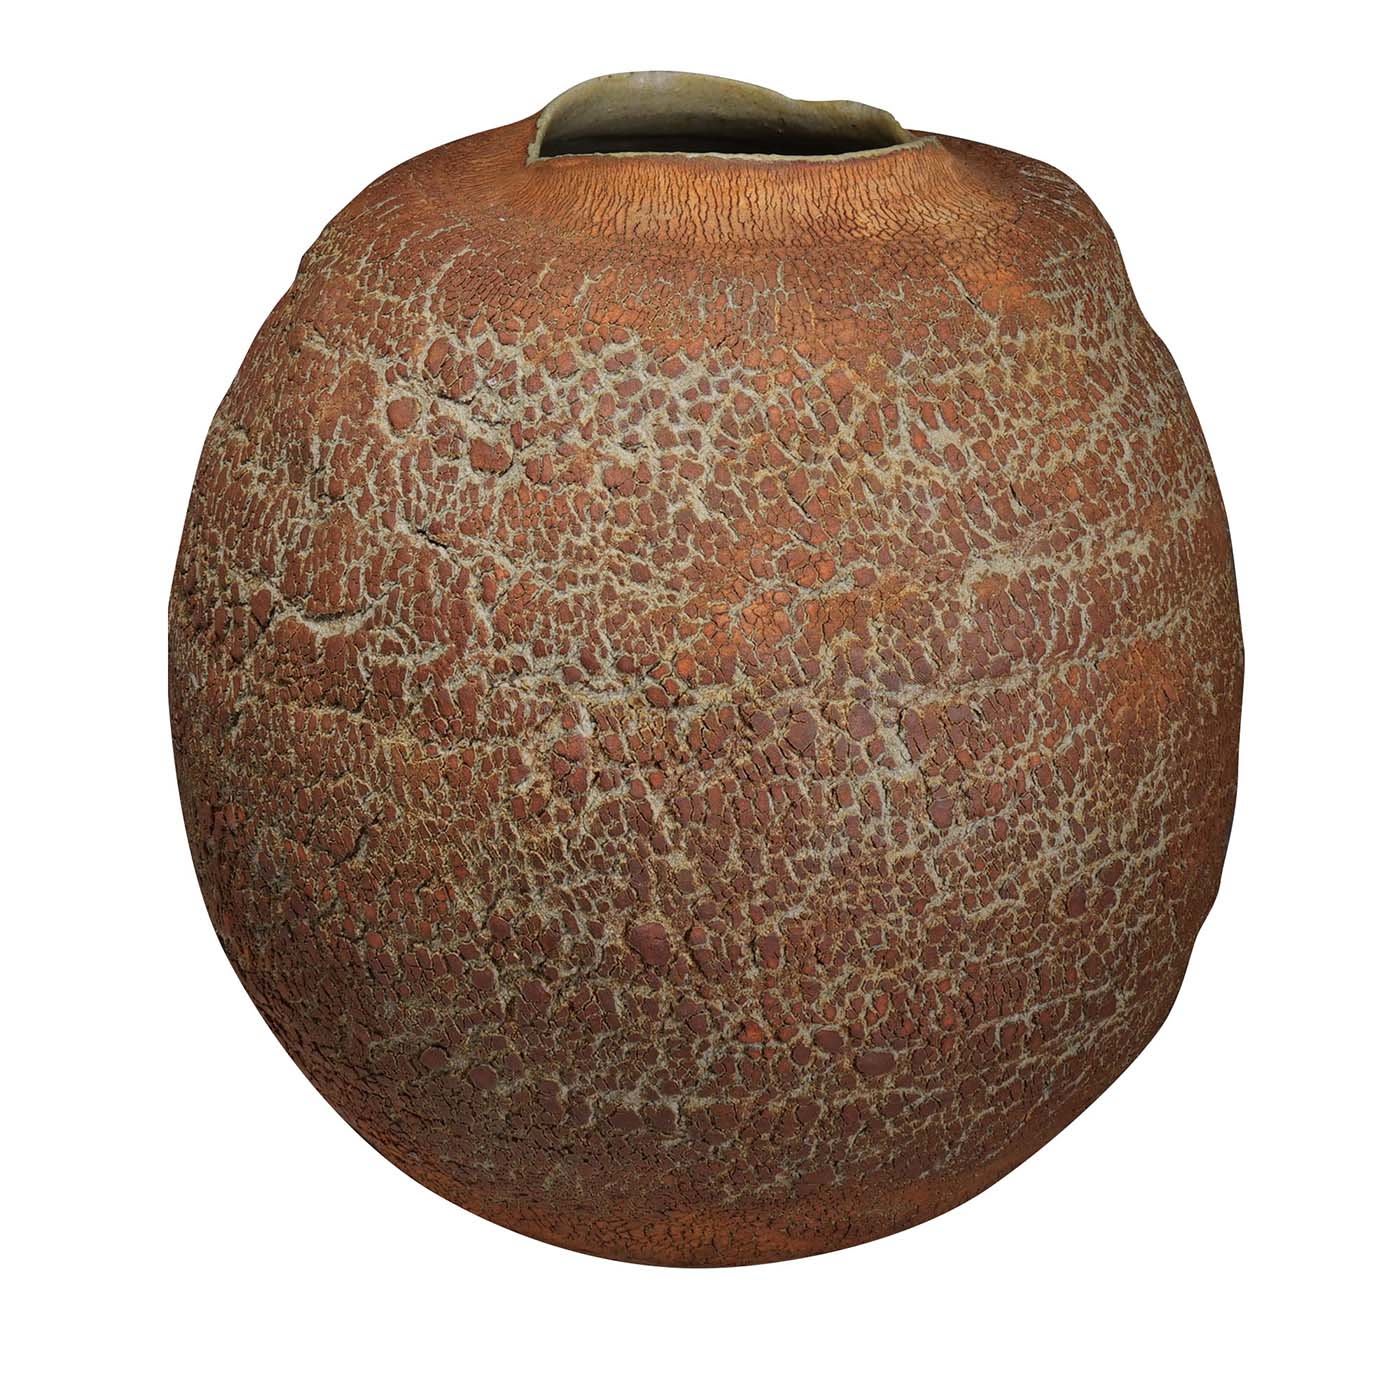 Toscana Earth Table Vase #2 - Terry Davies